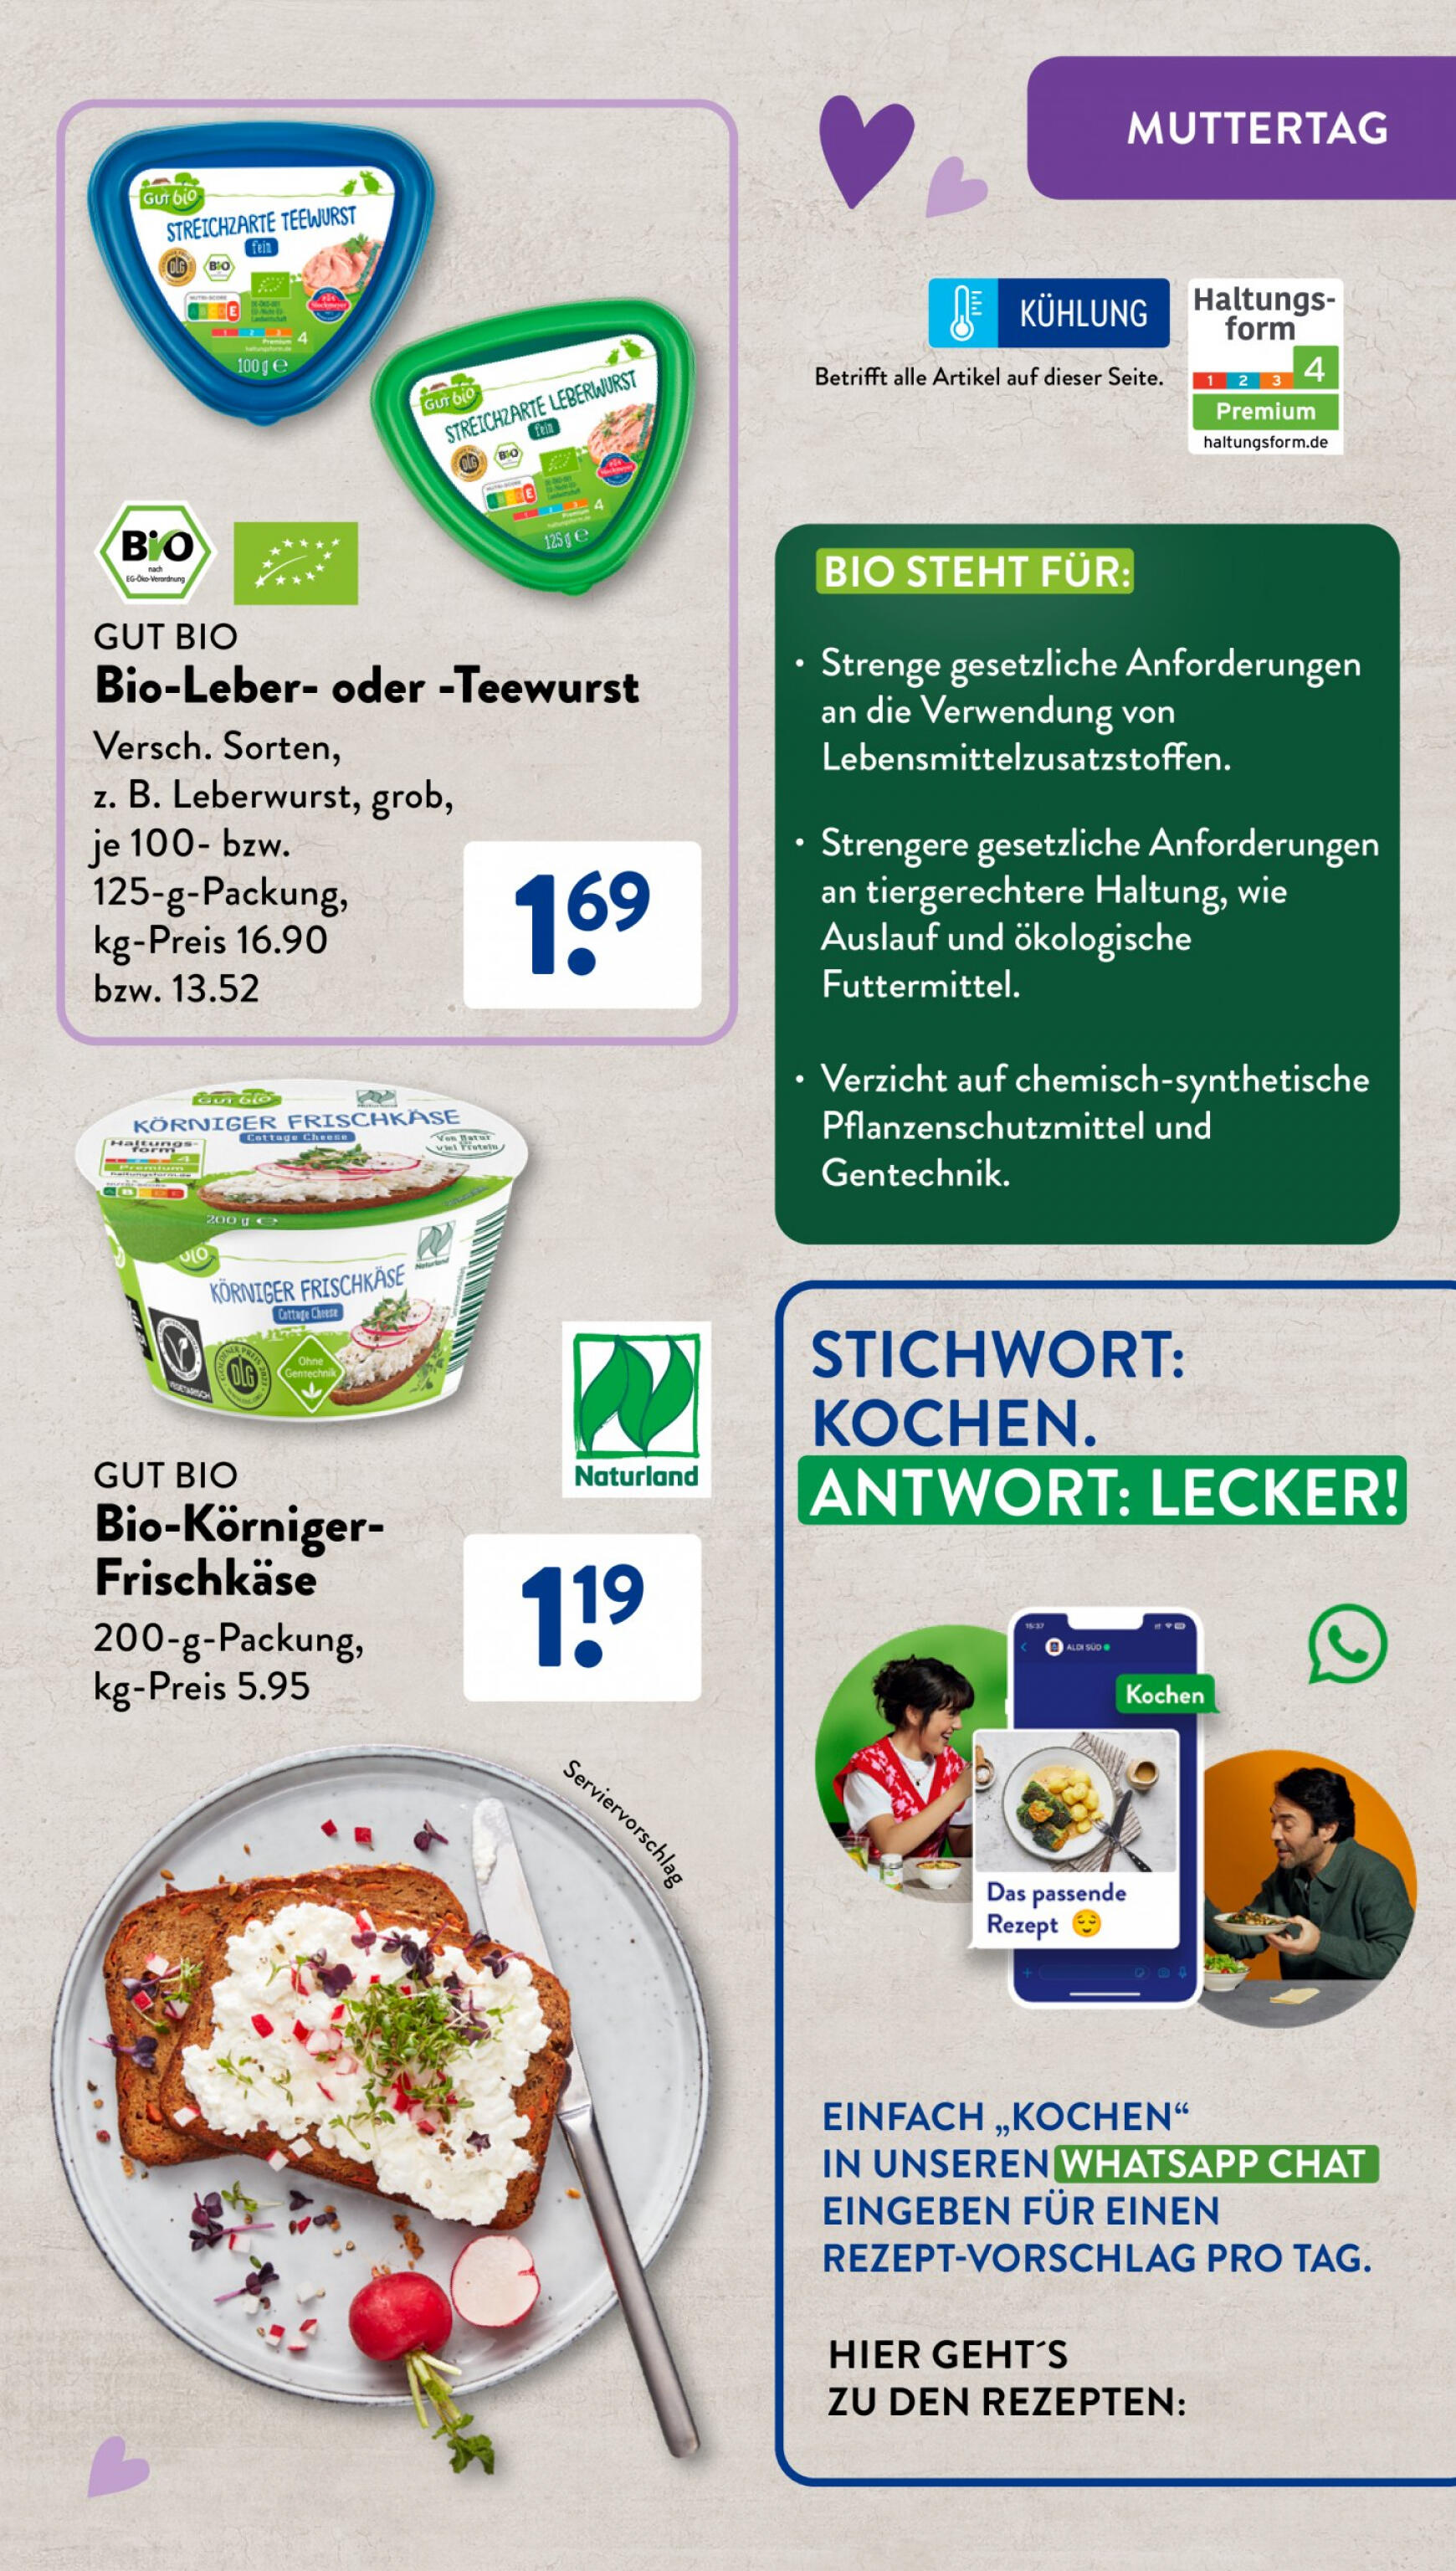 aldi - Flyer ALDI SÜD - Sortimentsprospekt aktuell 01.05. - 31.05. - page: 17